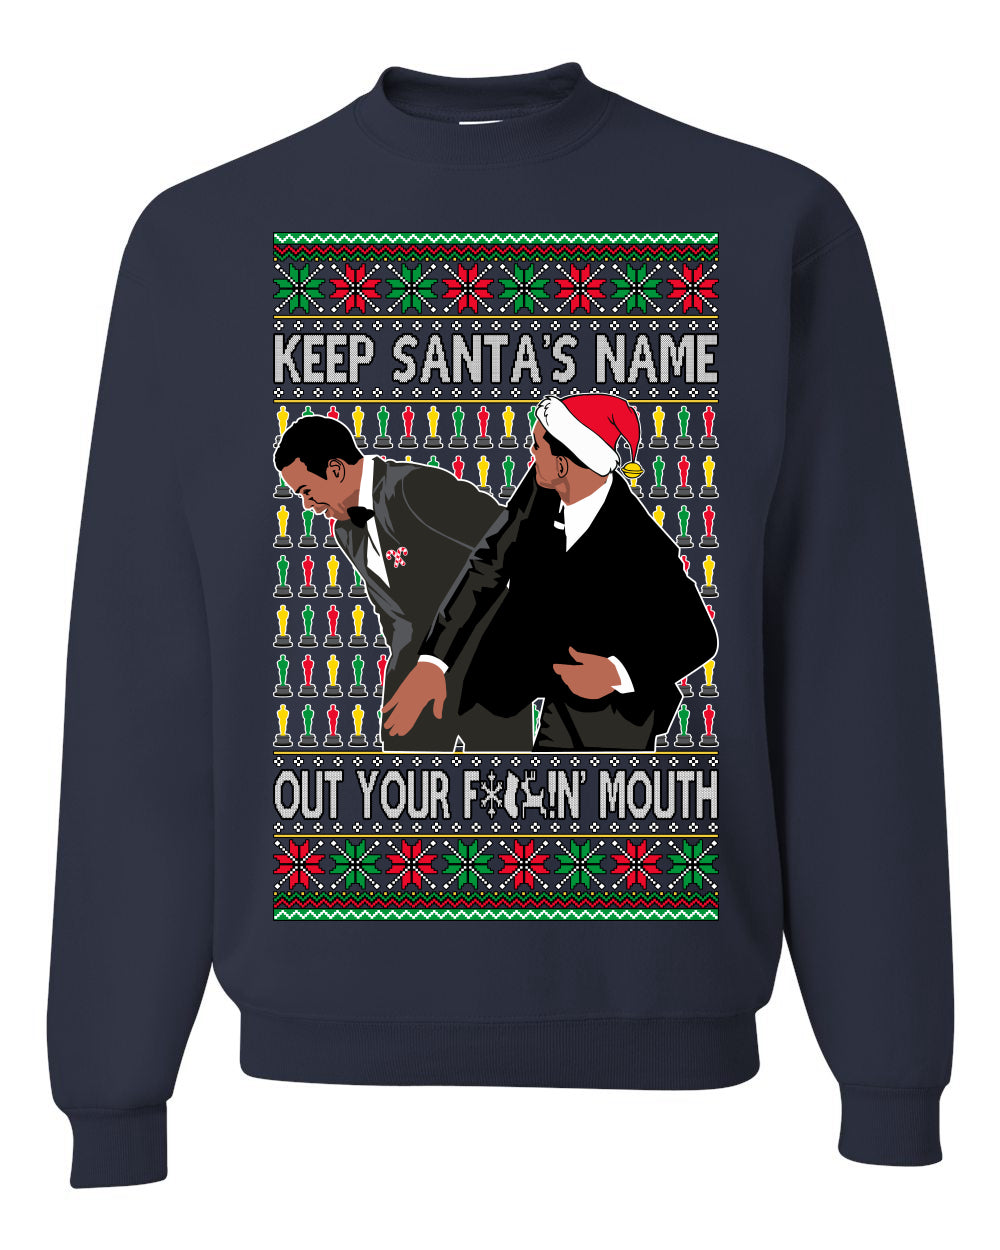 Will Slapping Chris Wife Joke Award Show Meme Parody Clean Ugly Christmas Sweater Unisex Crewneck Graphic Sweatshirt